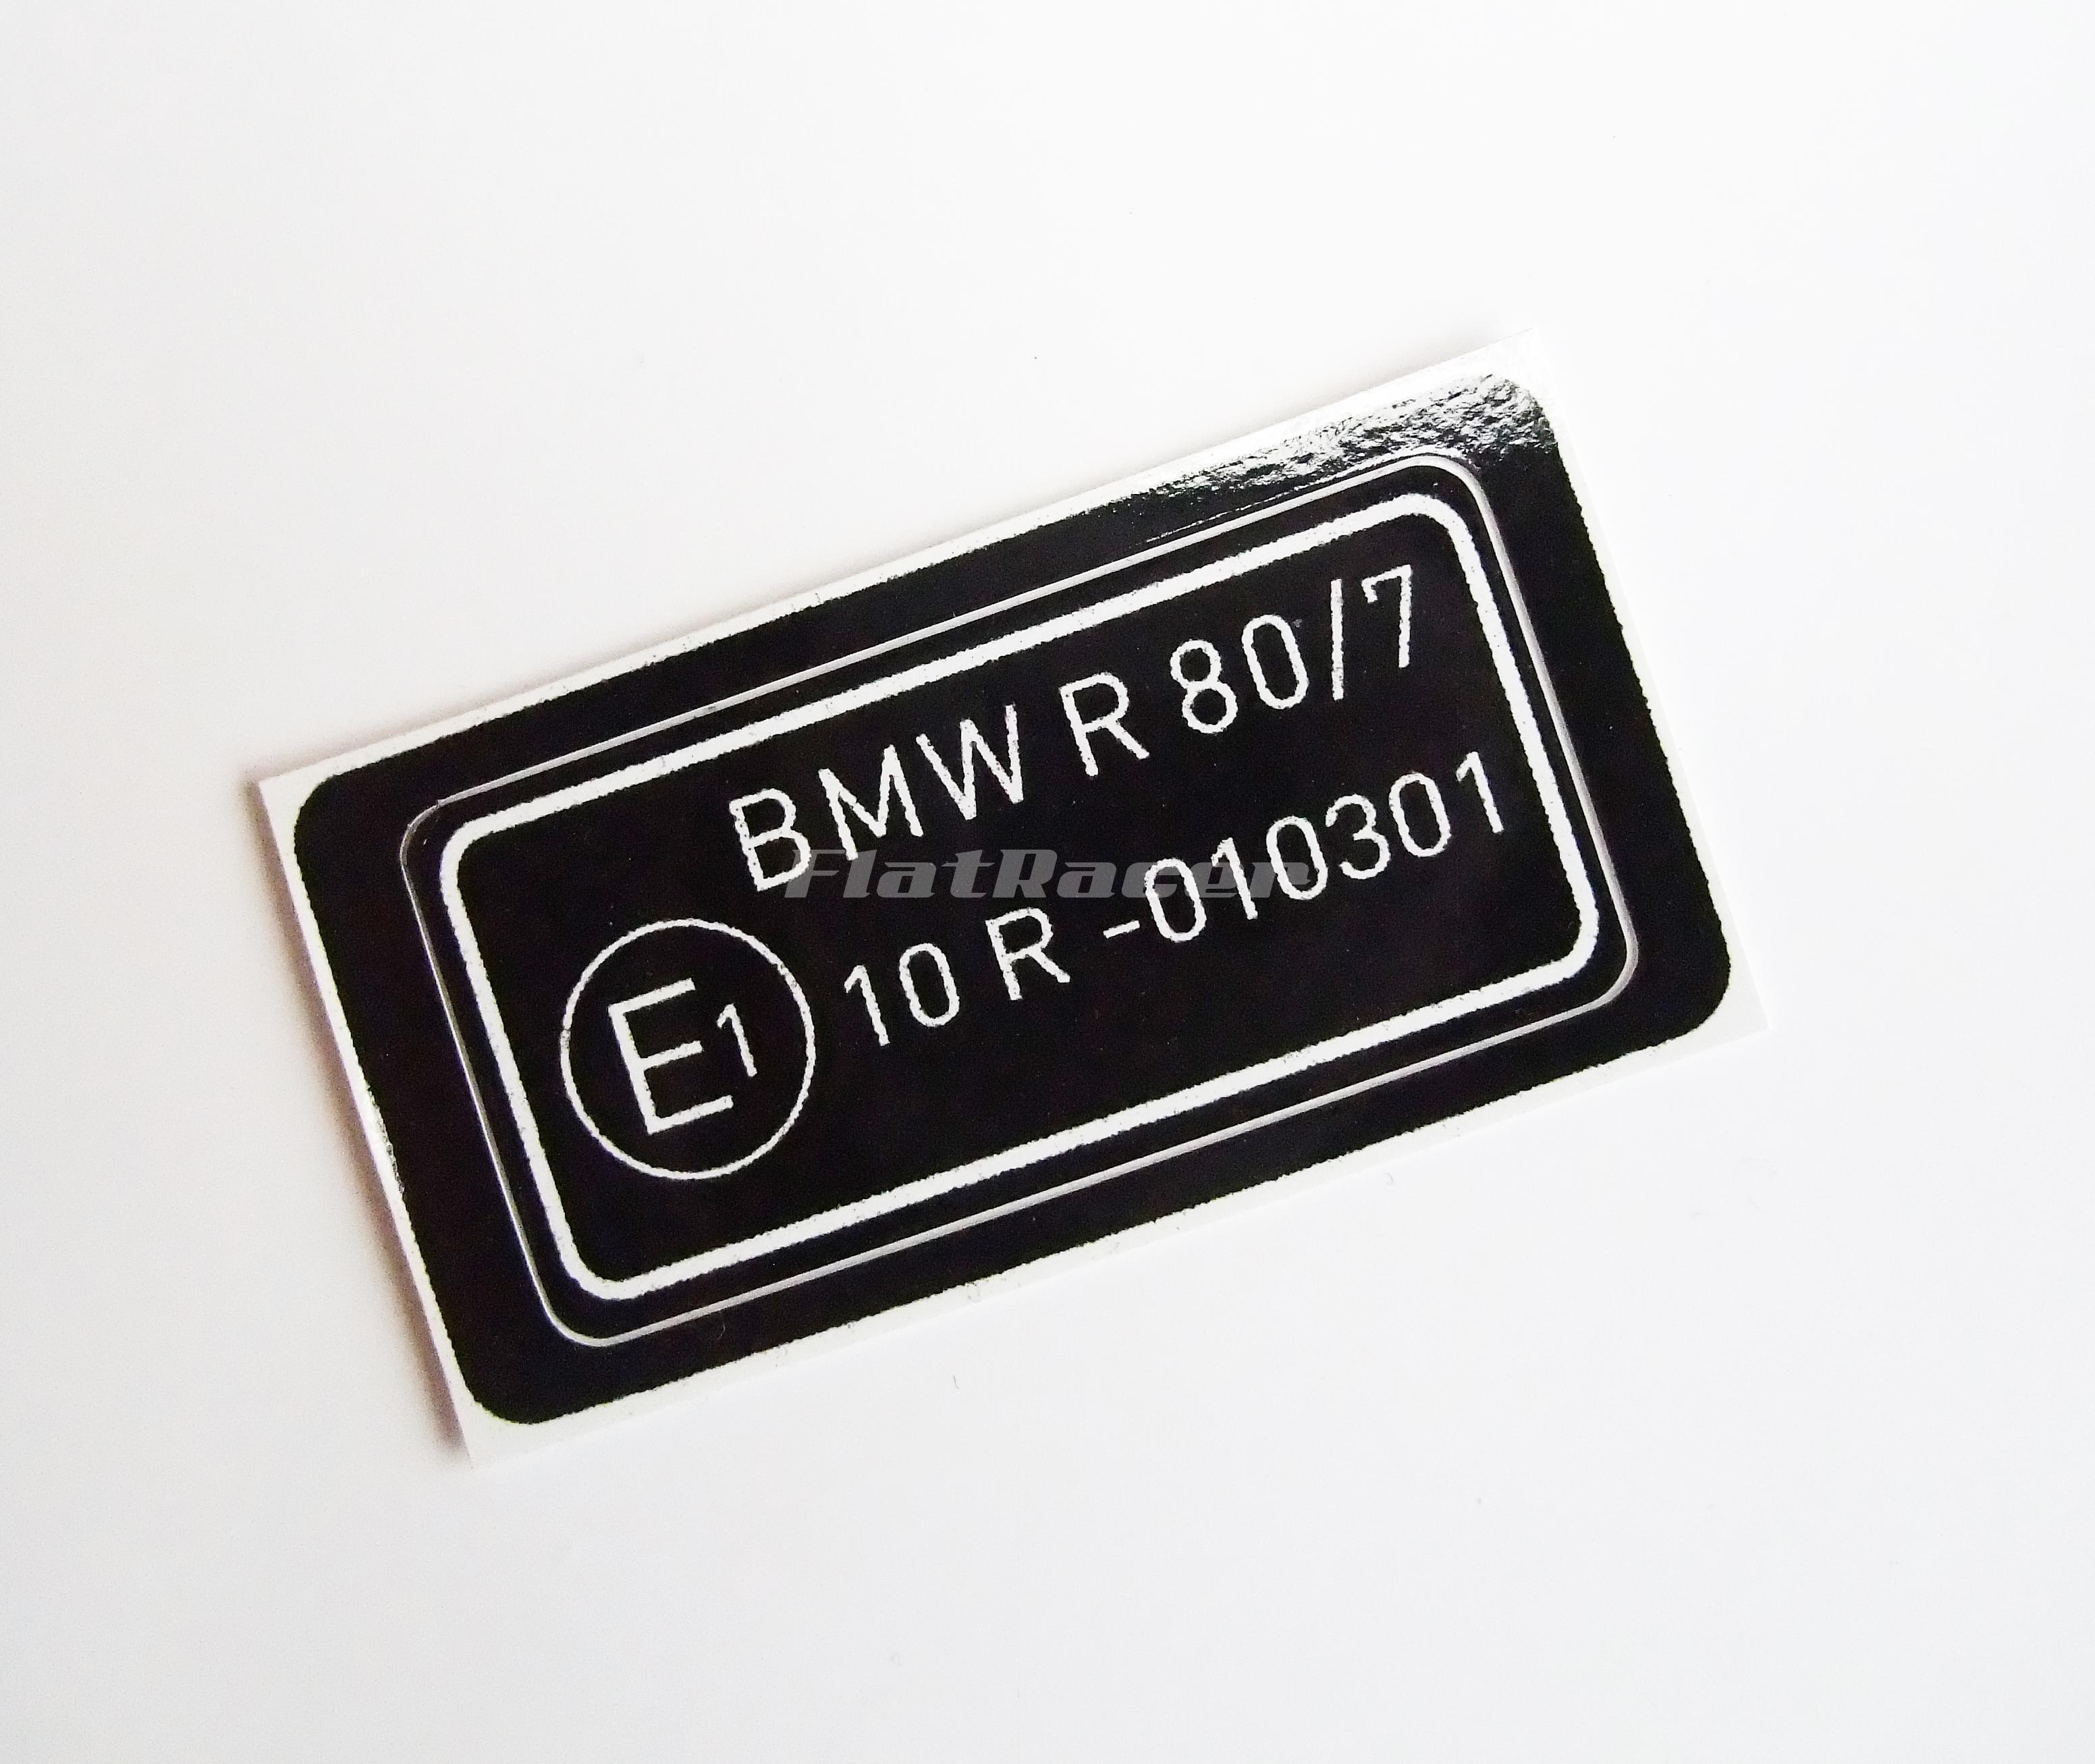 BMW R80/7 - Series 7 (76-84) E1 homologation sticker - 10R - 010301